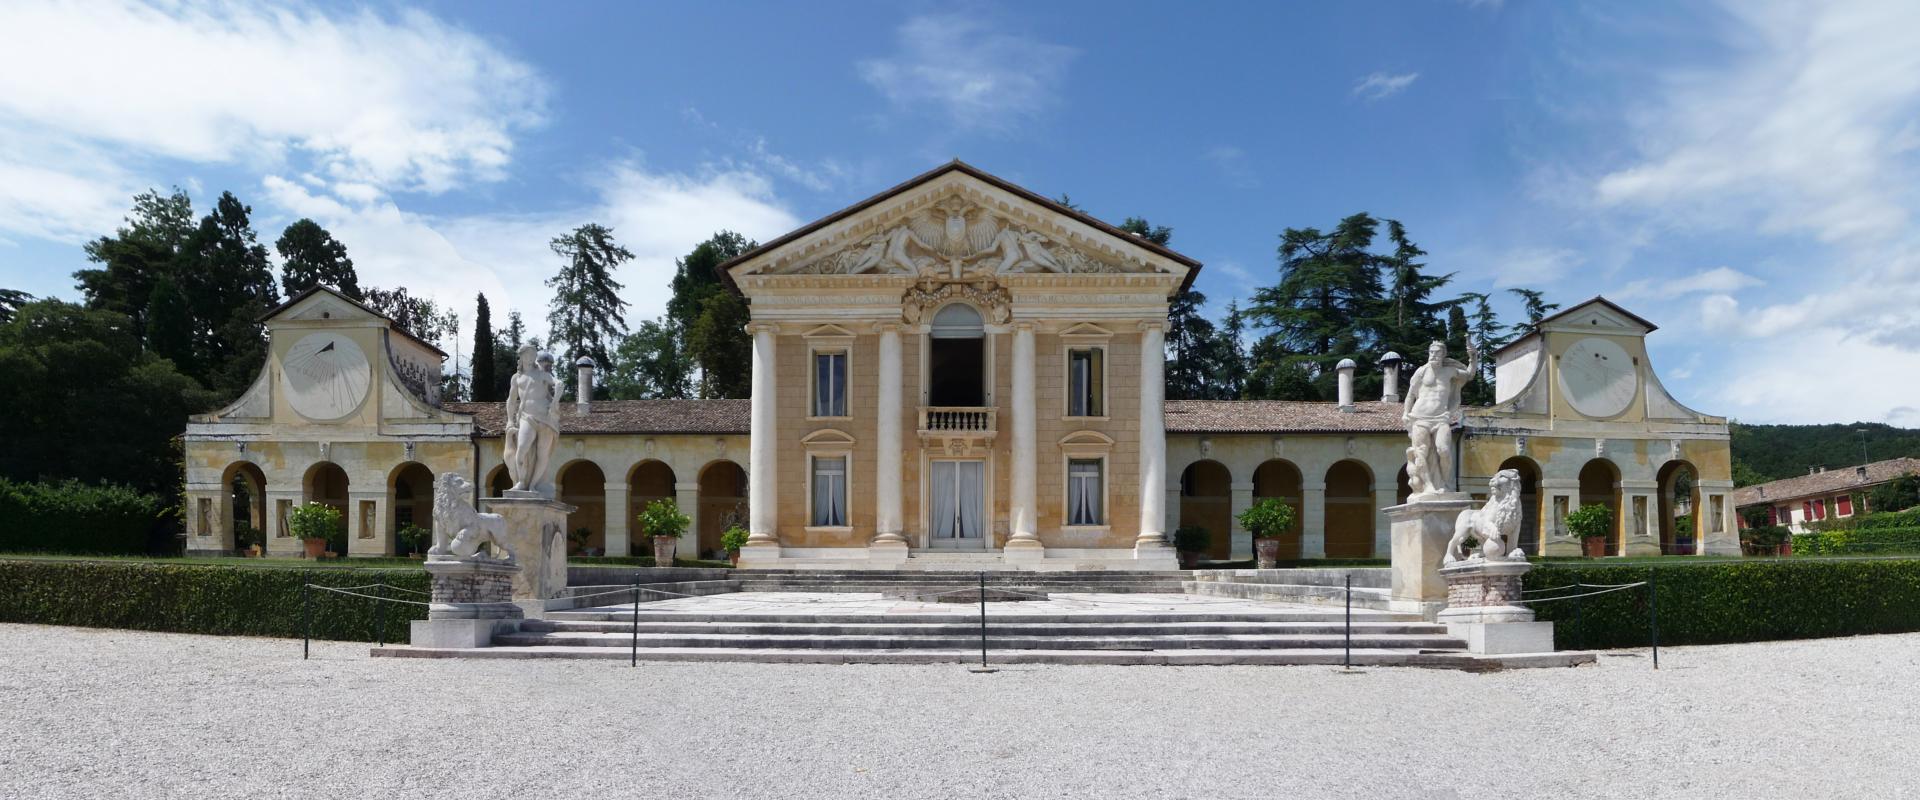 Visit of Asolo and Palladian Villa Barbaro